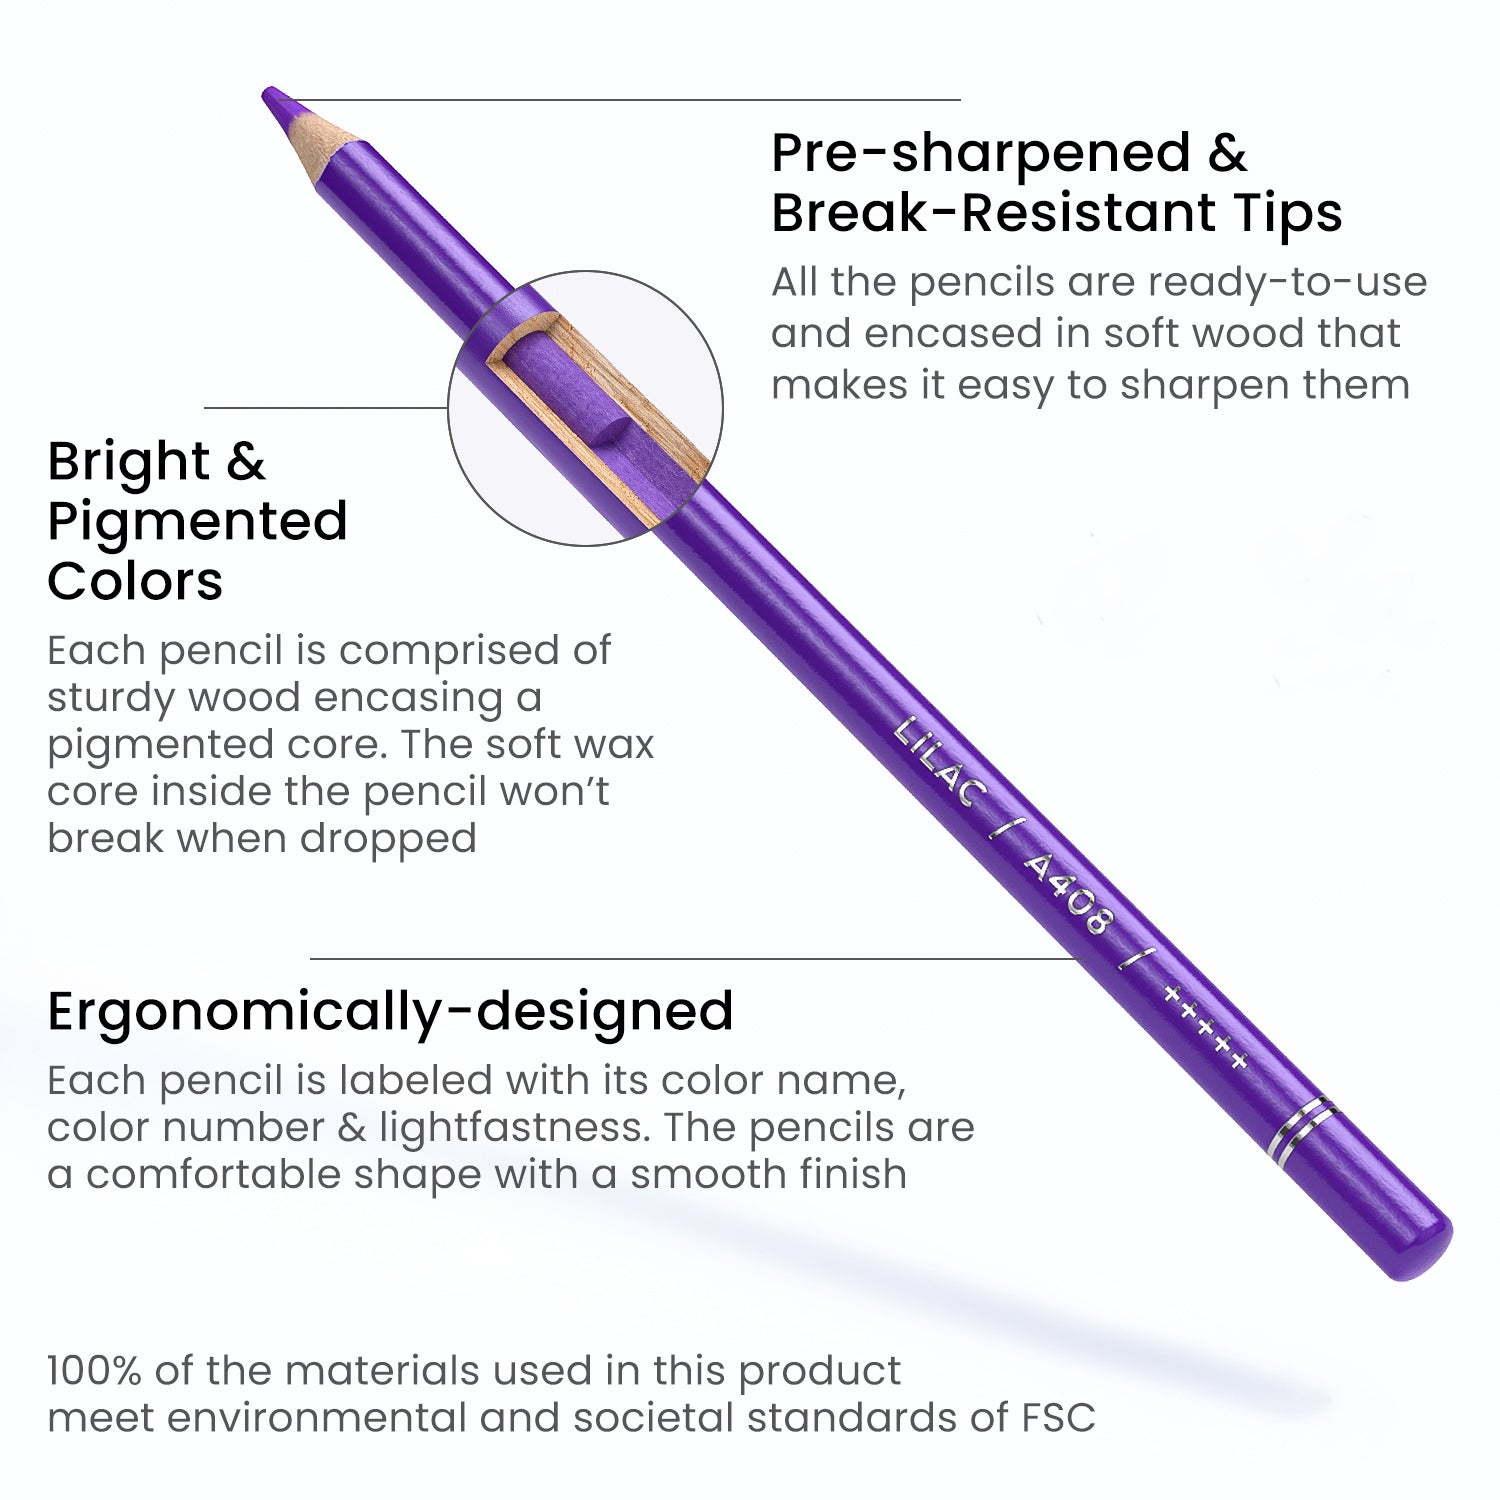 ARTEZA Colored Pencils, Professional Set of 48 Colors, Soft Wax-Based Cores  857909007131